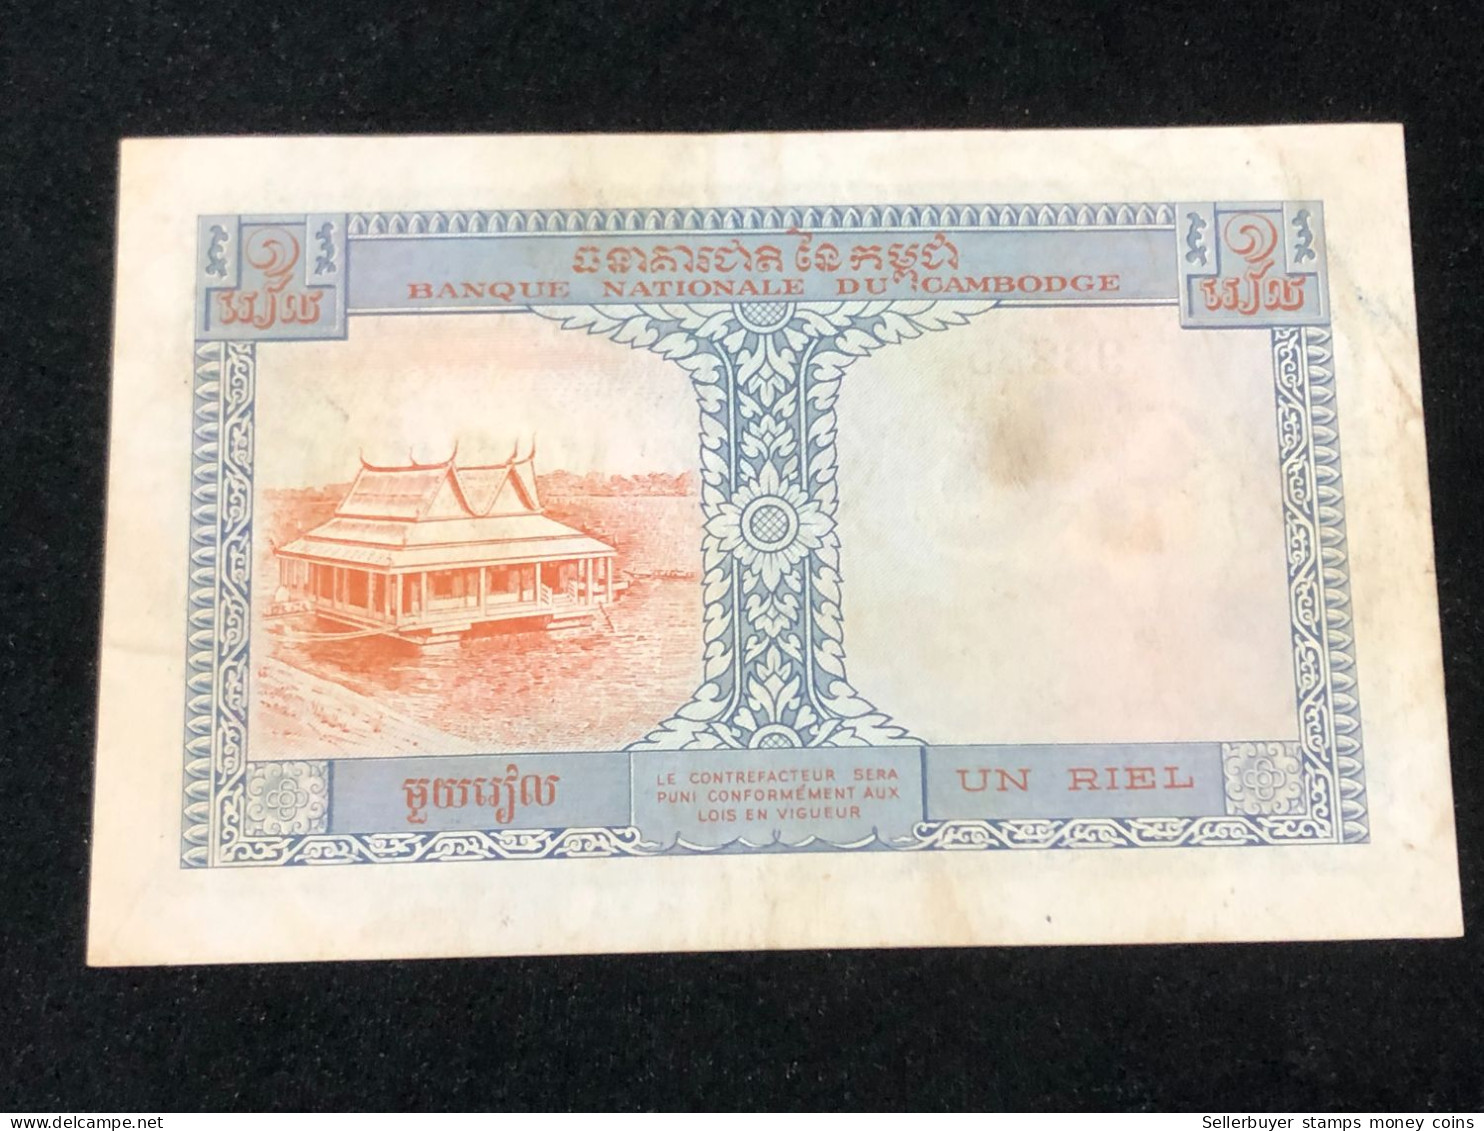 Cambodia Kingdom Banknotes #7 -1 Riels 1955--1 Pcs Xfau Very Rare - Cambodia